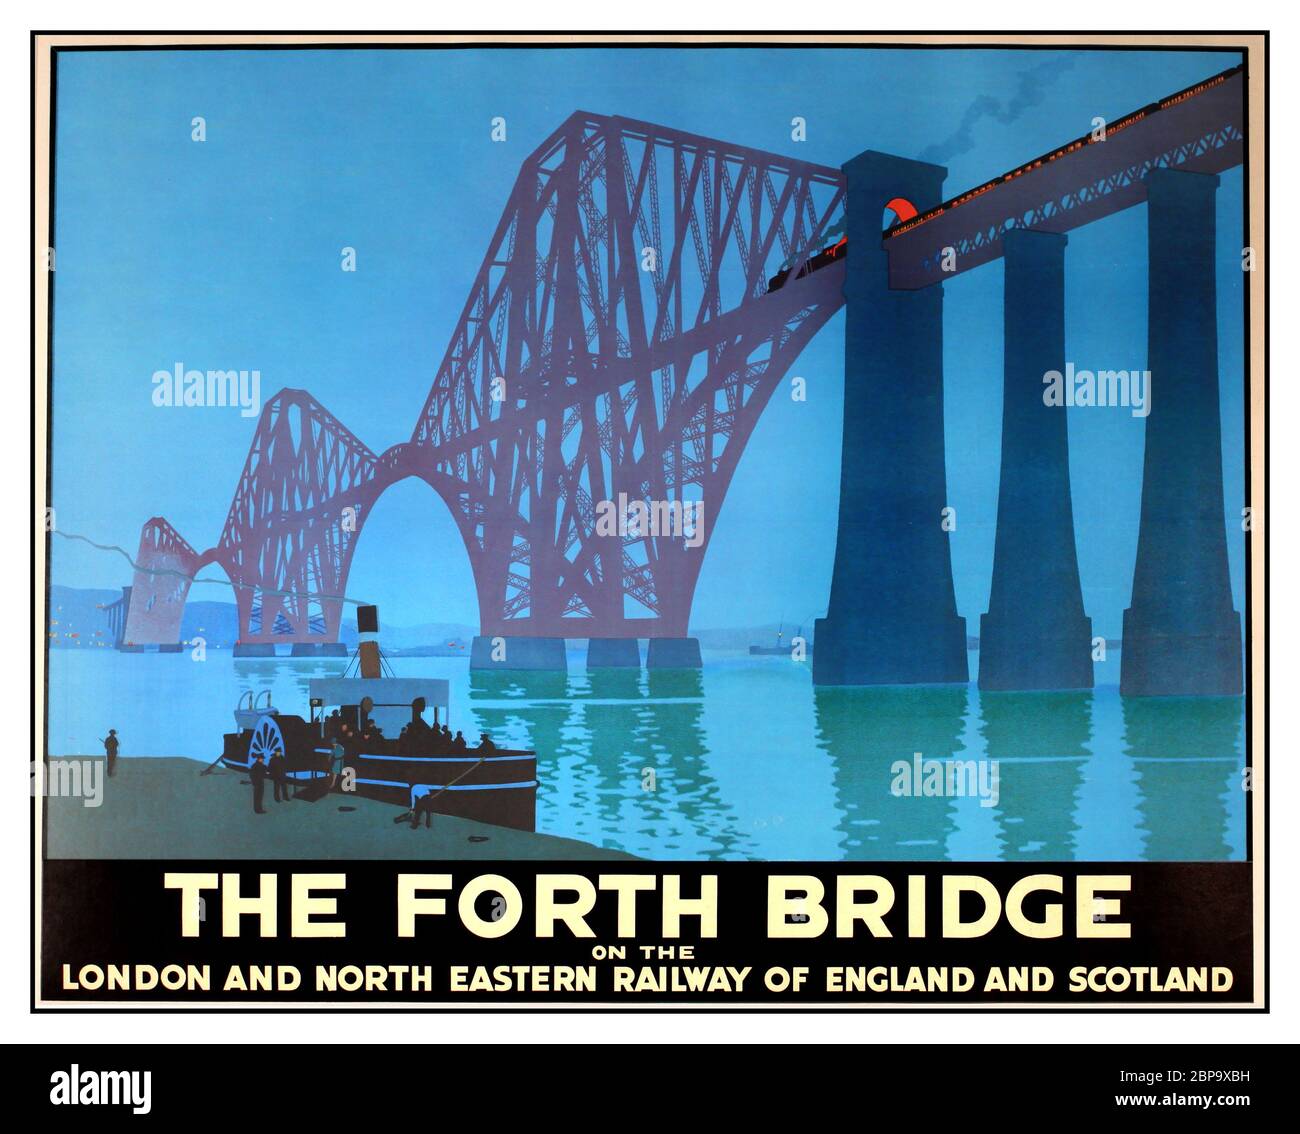 Edinburgh Scotland Vintage LNER  Railway Poster A1,A2,A3,A4 Sizes FORTH BRIDGE. 